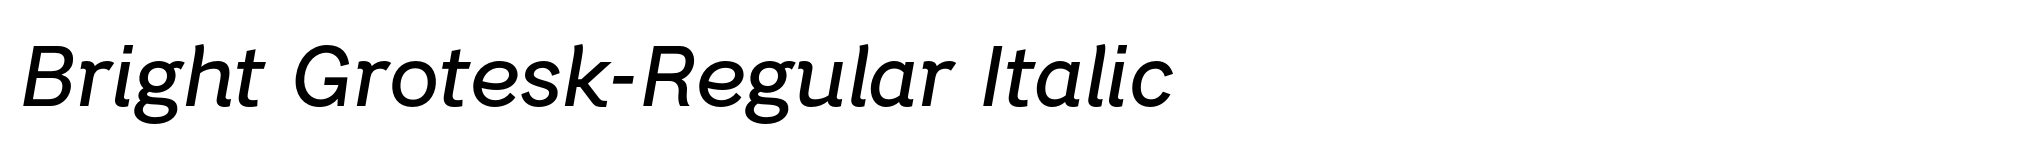 Bright Grotesk-Regular Italic image